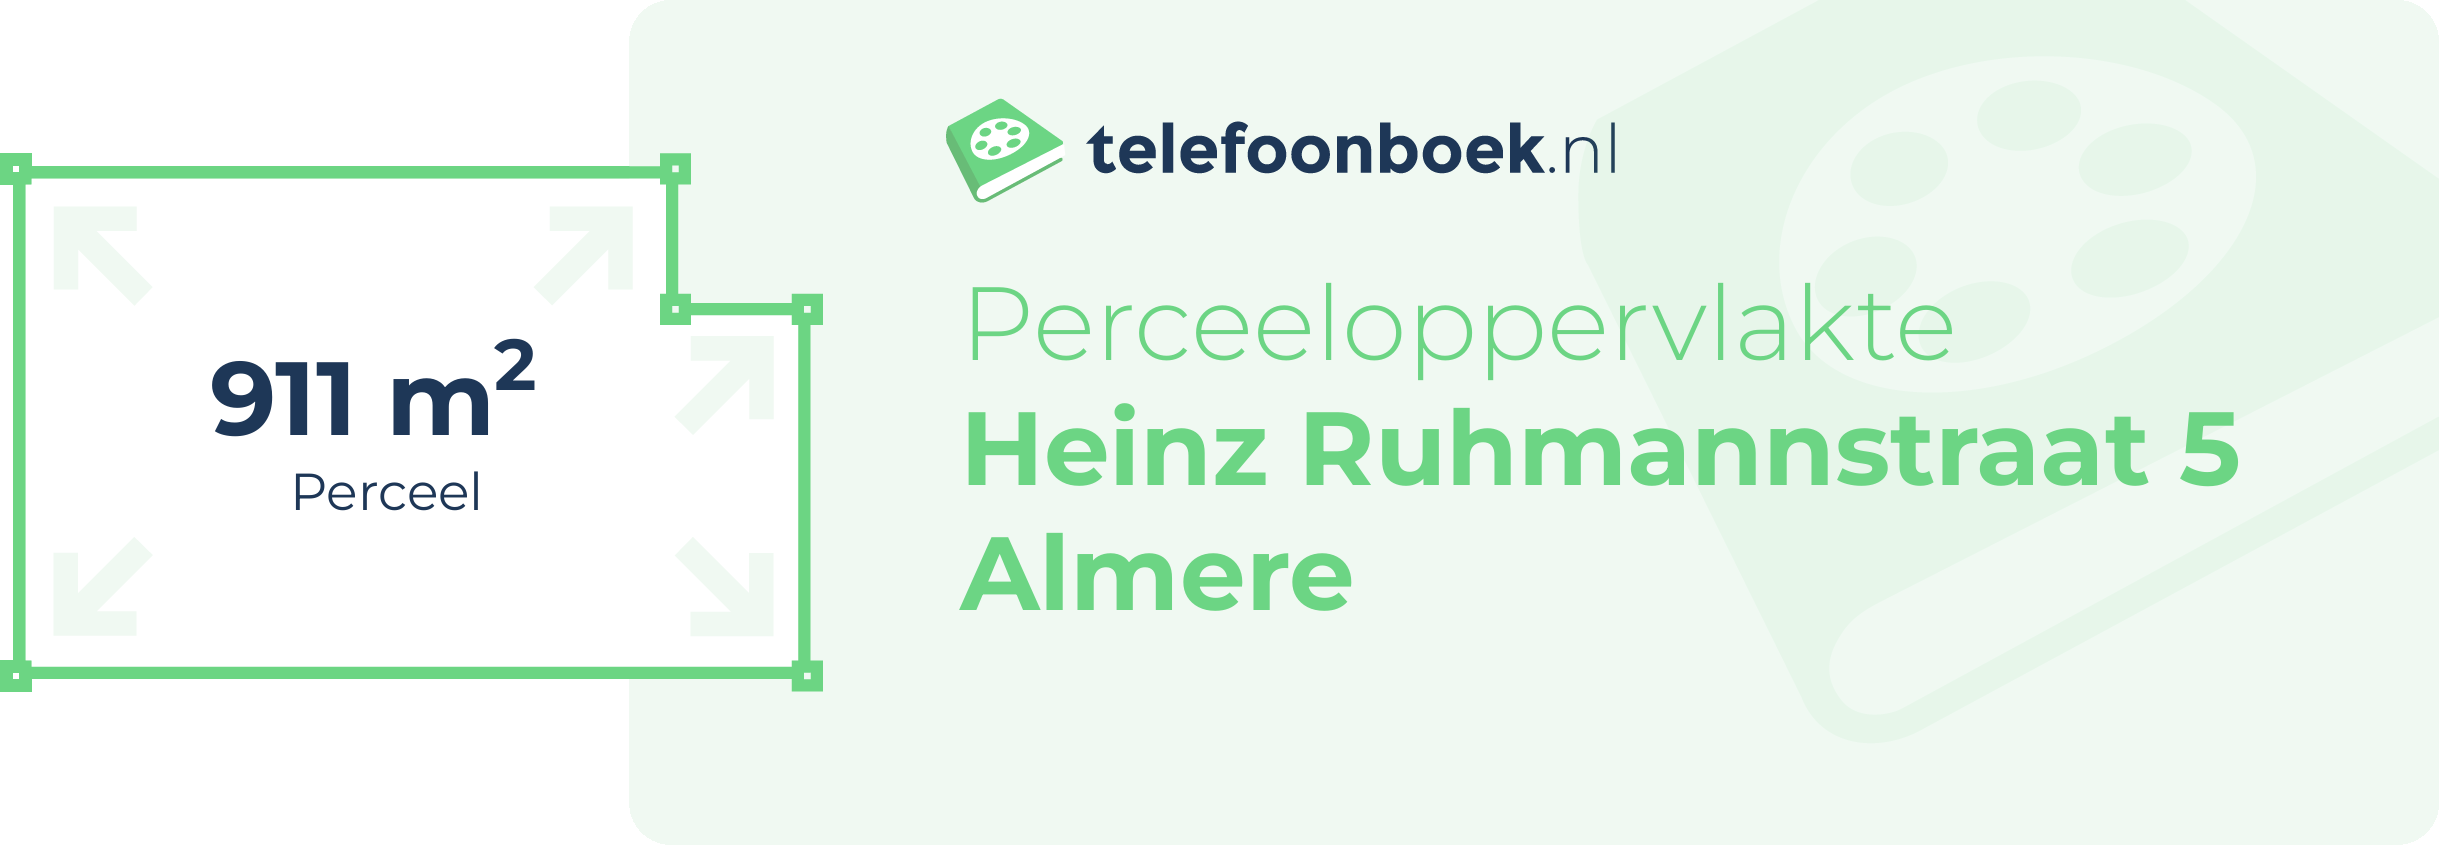 Perceeloppervlakte Heinz Ruhmannstraat 5 Almere